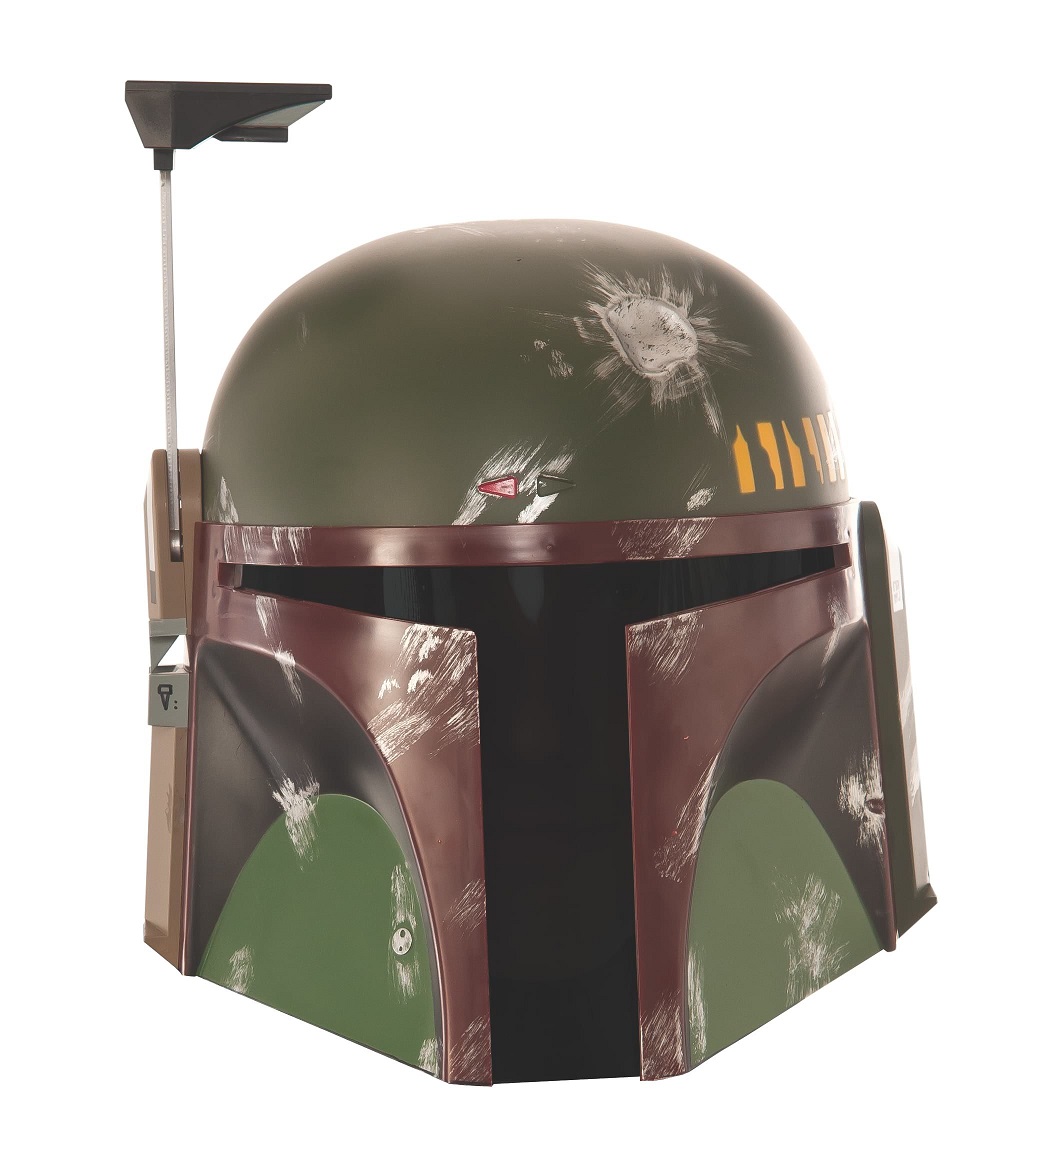 Star Wars Boba Fett Helmet Prop Replica 